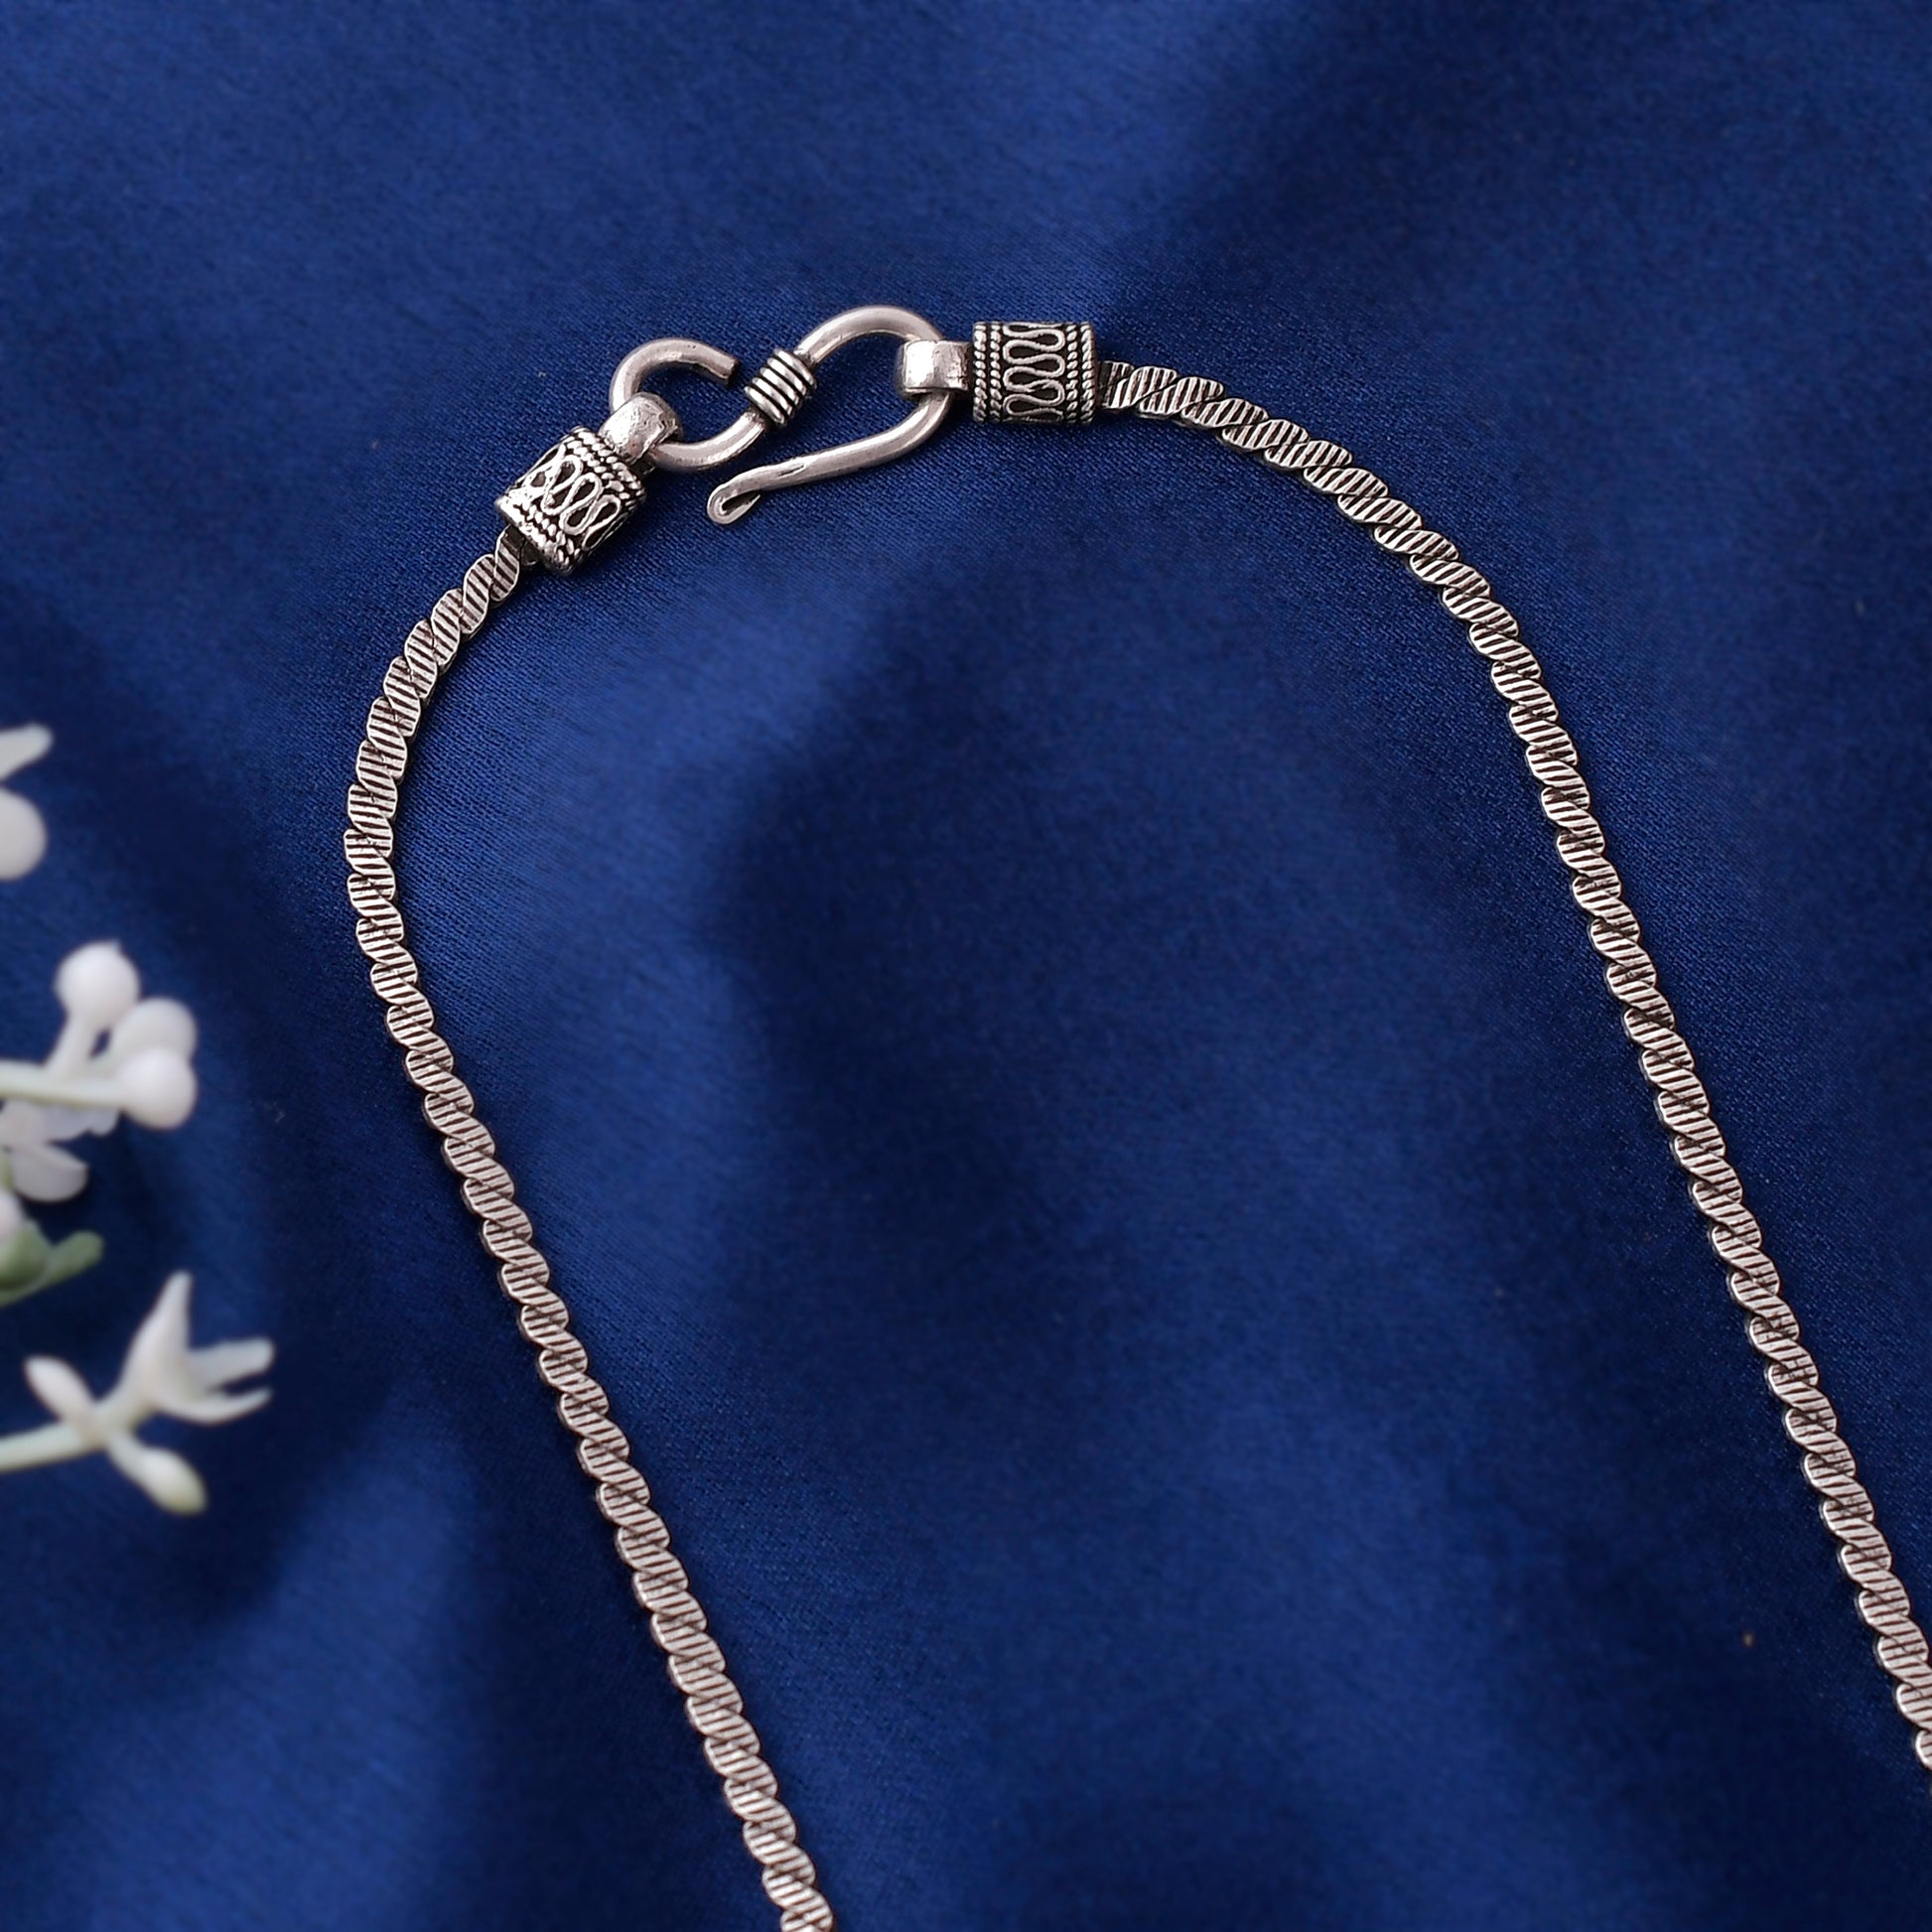 Men's silver chain necklaces